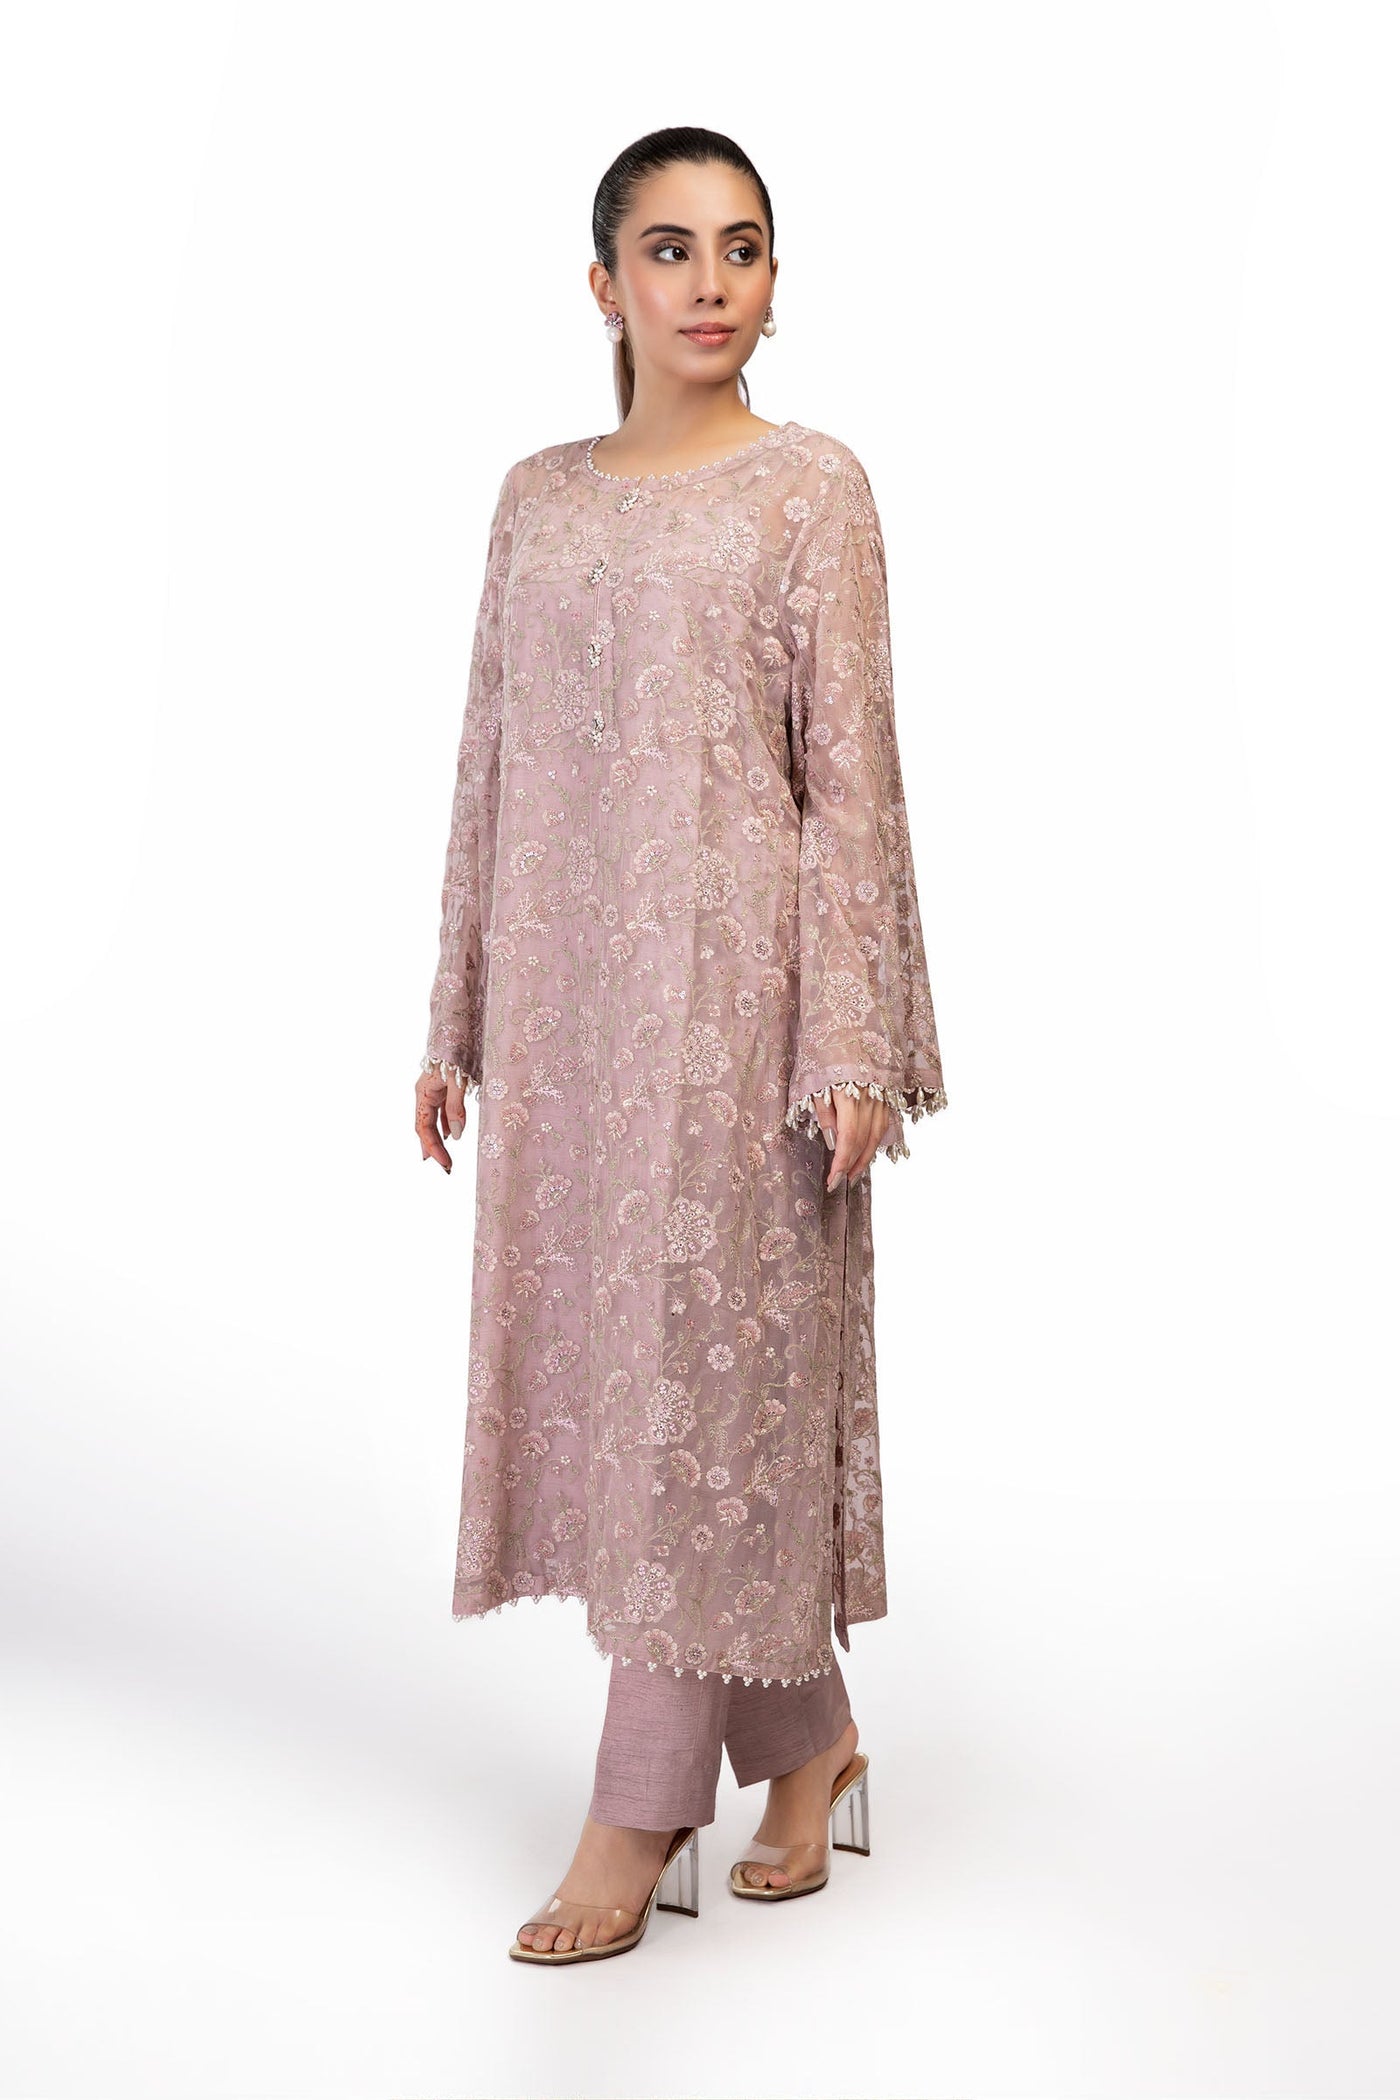 M.Luxe Fabrics LF-CC-110-C/Shirt-Lilac